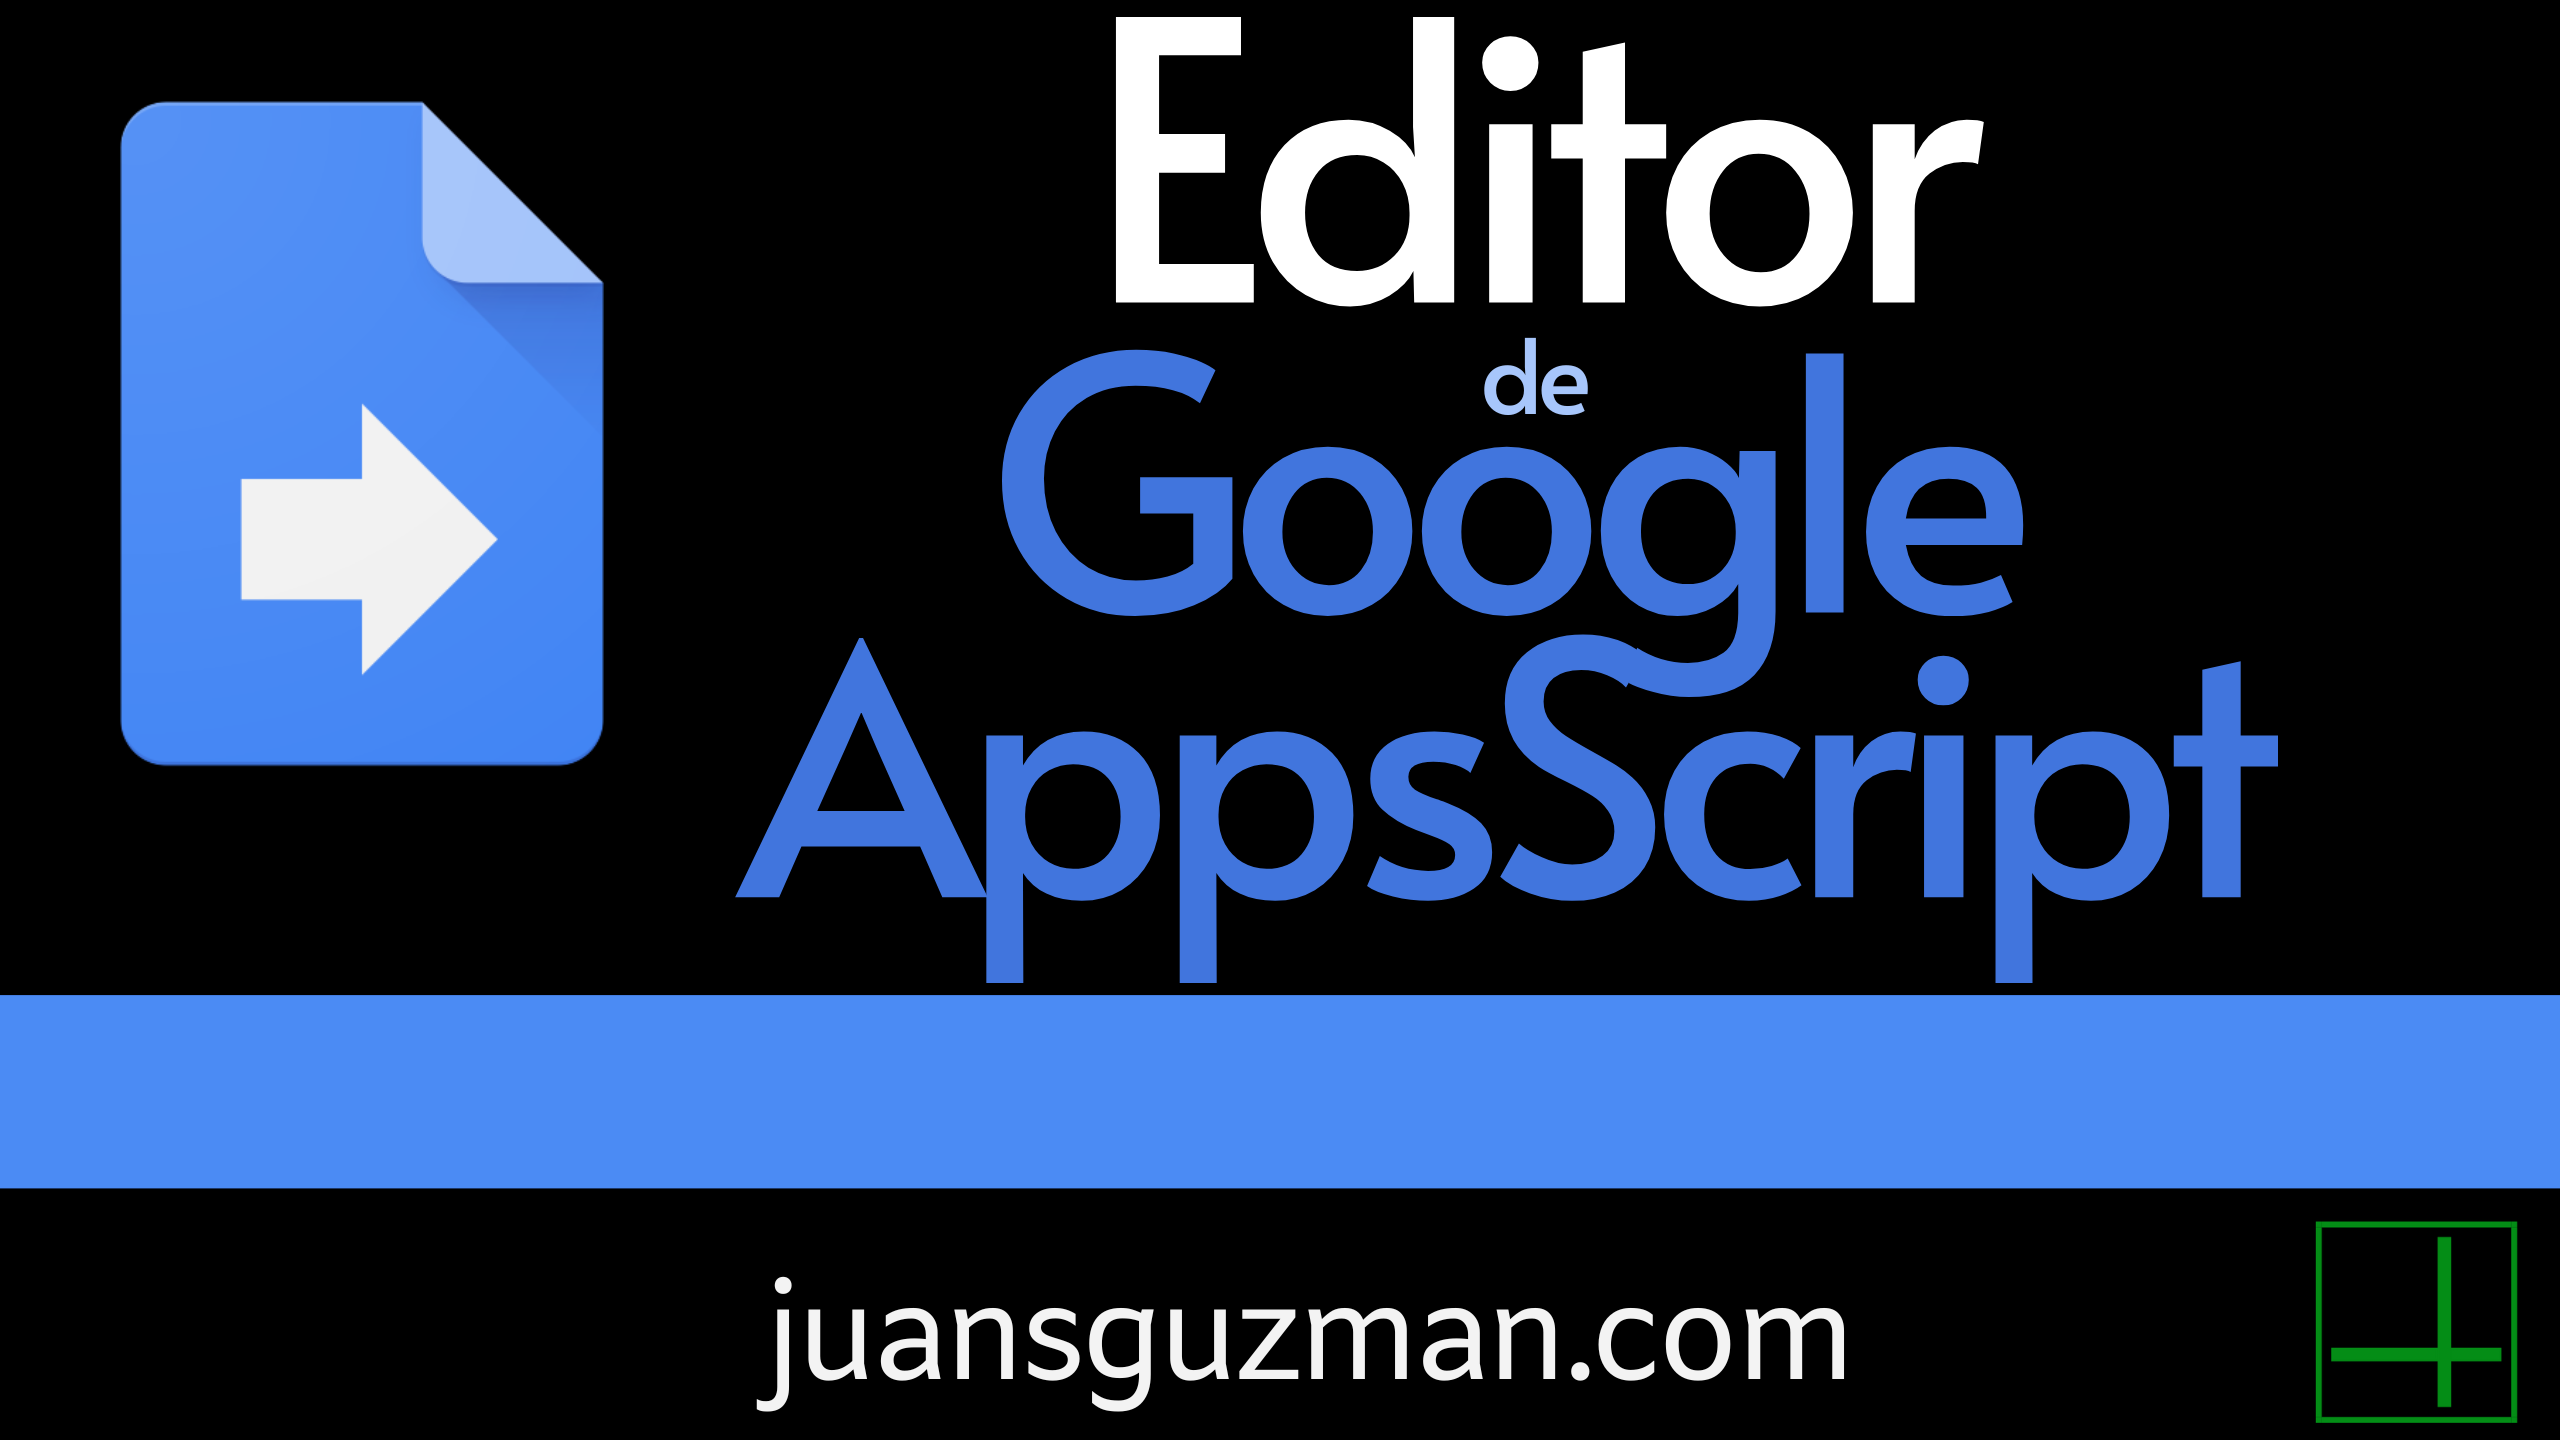 Editor de Google Apps Script